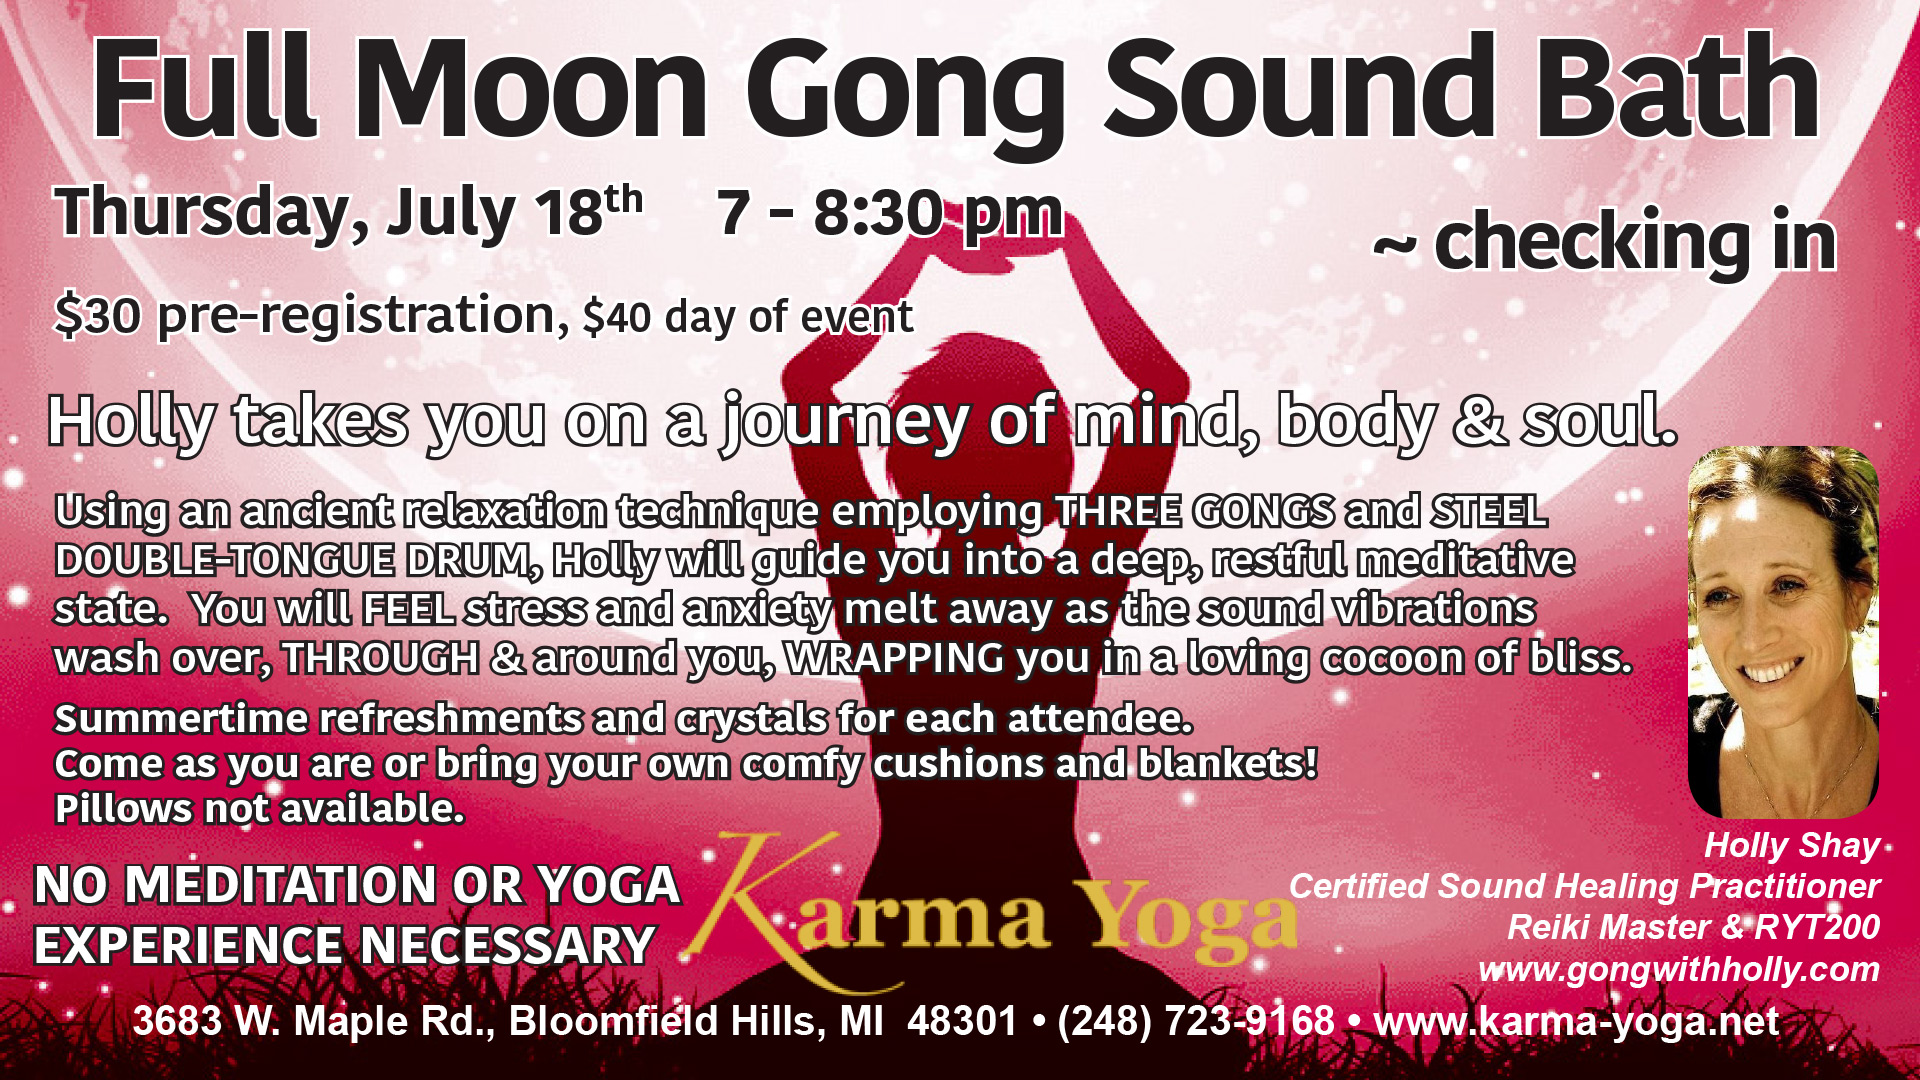 Full Moon Gong Sound Bath, July 18, Karma Yoga, Bloomfield Hills